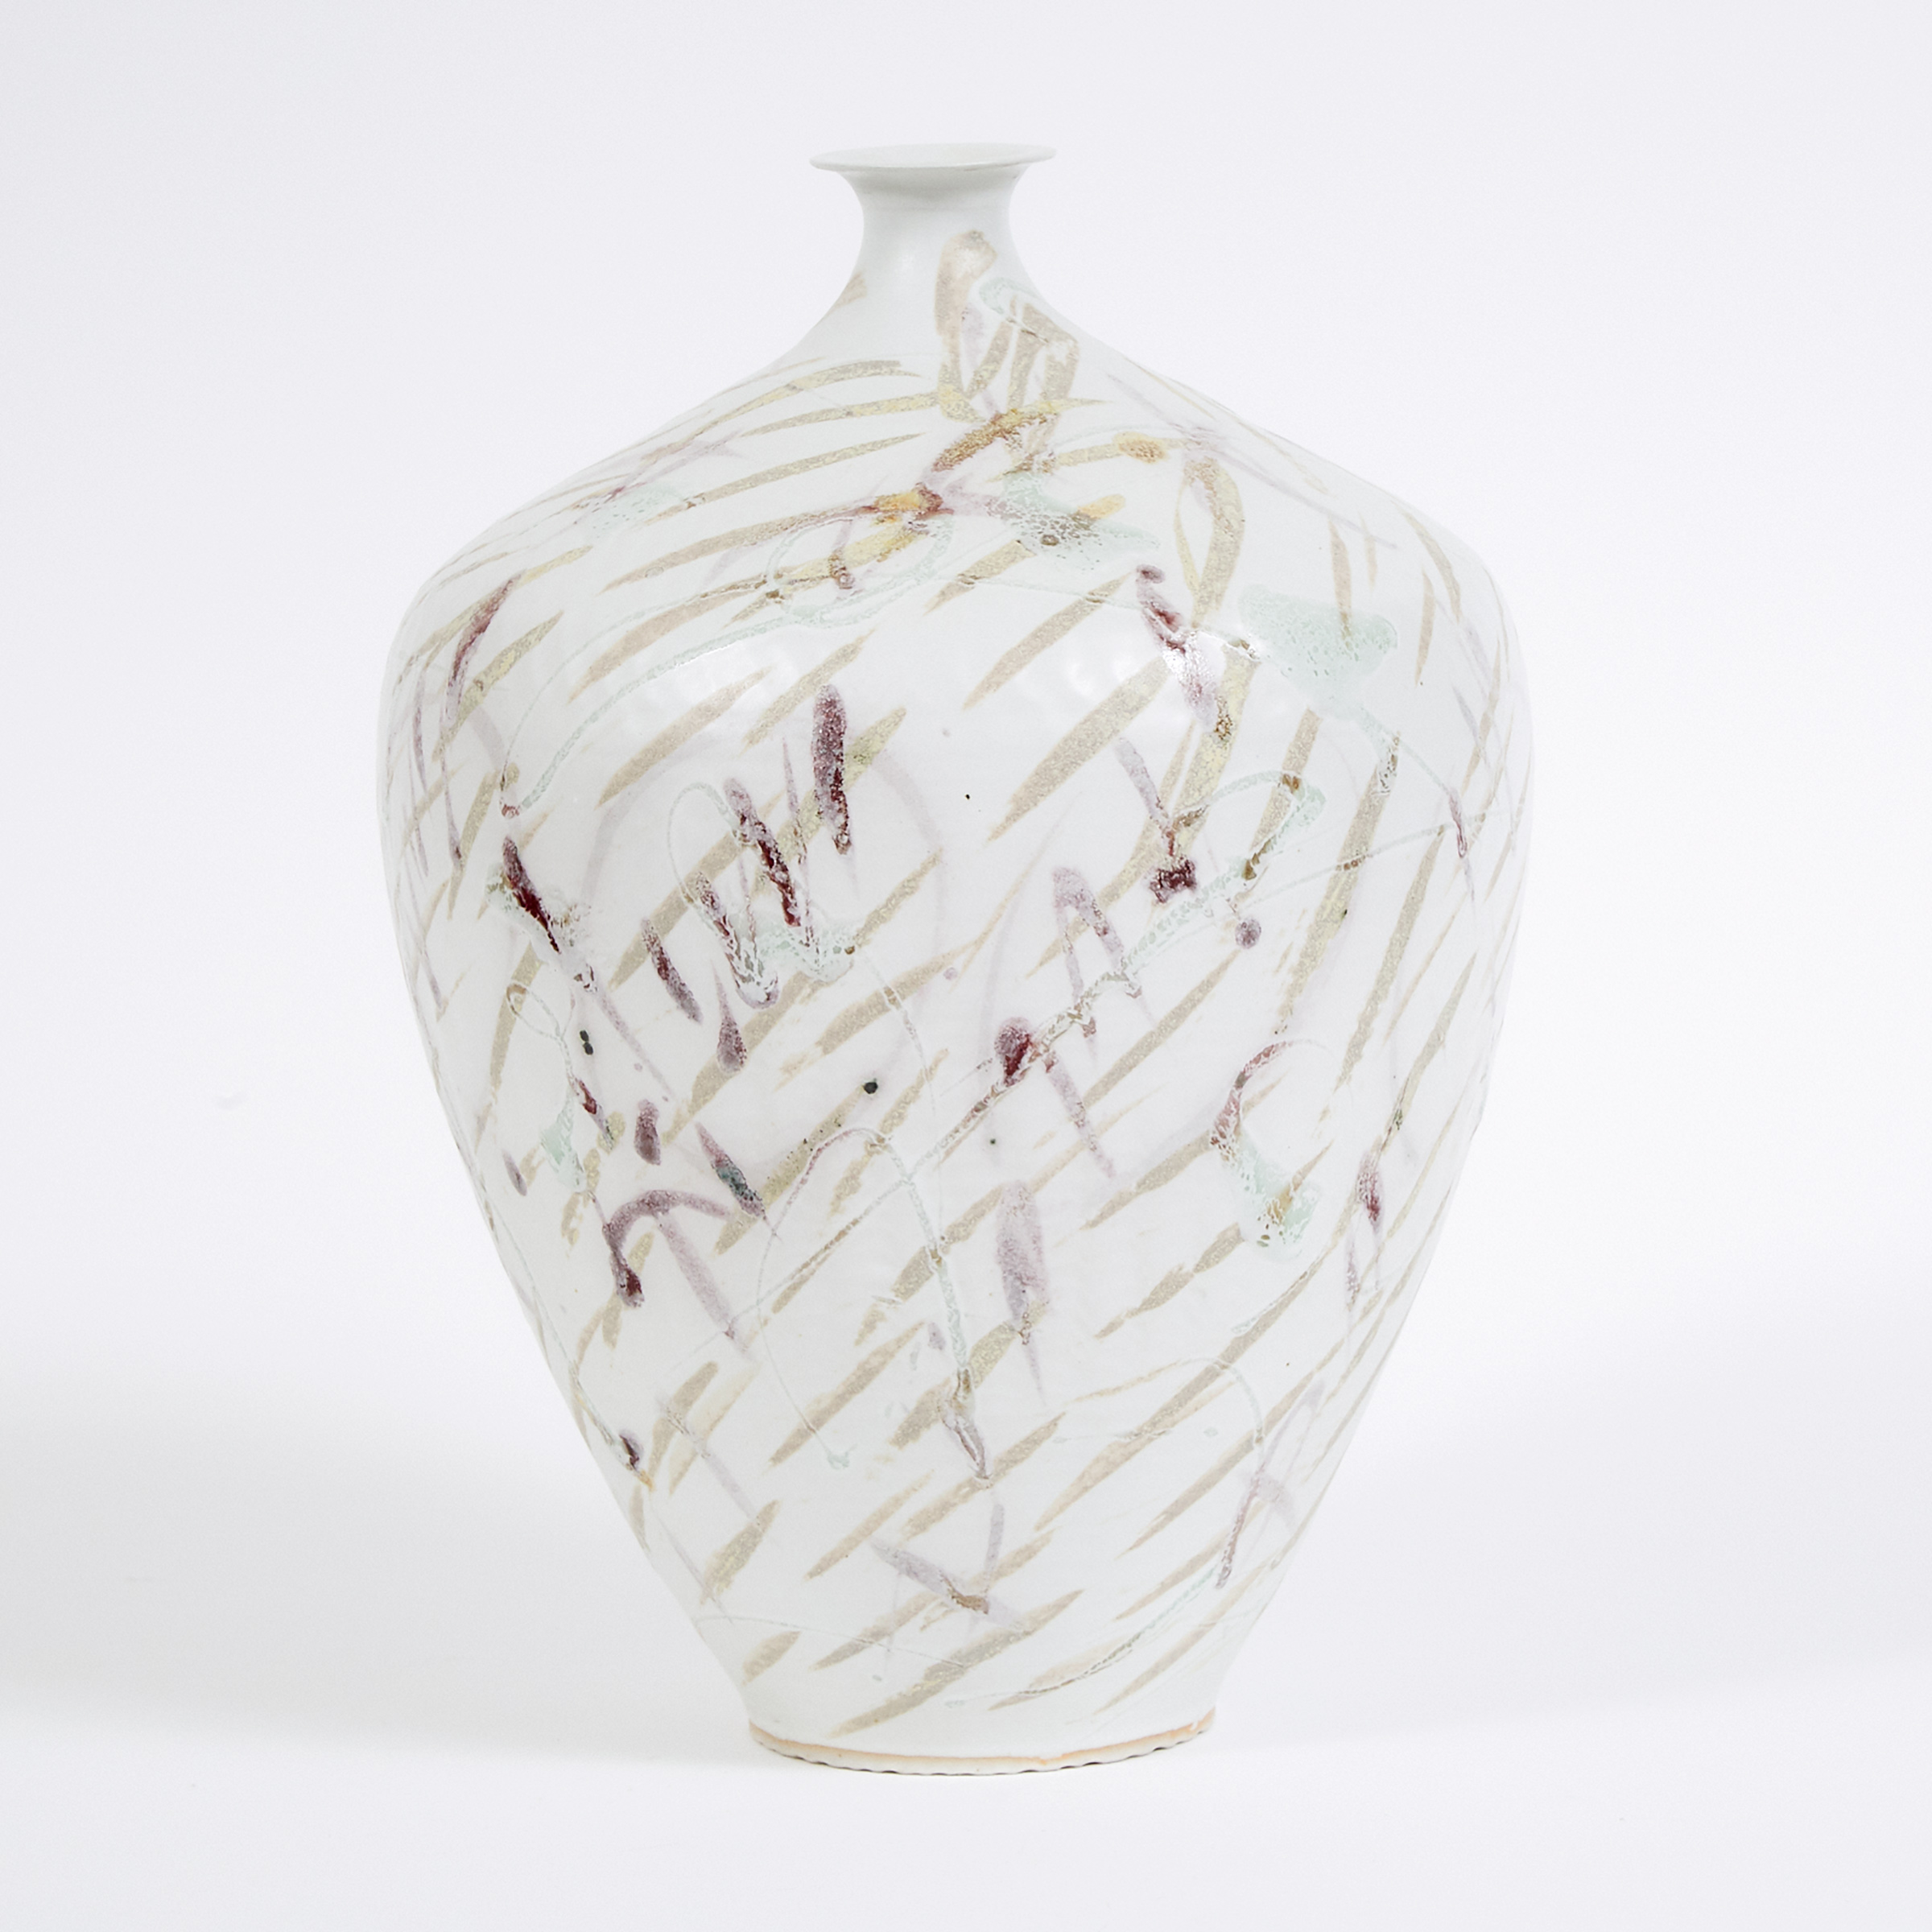 Kayo O'Young (Canadian, b.1950), Shouldered Vase, 1993